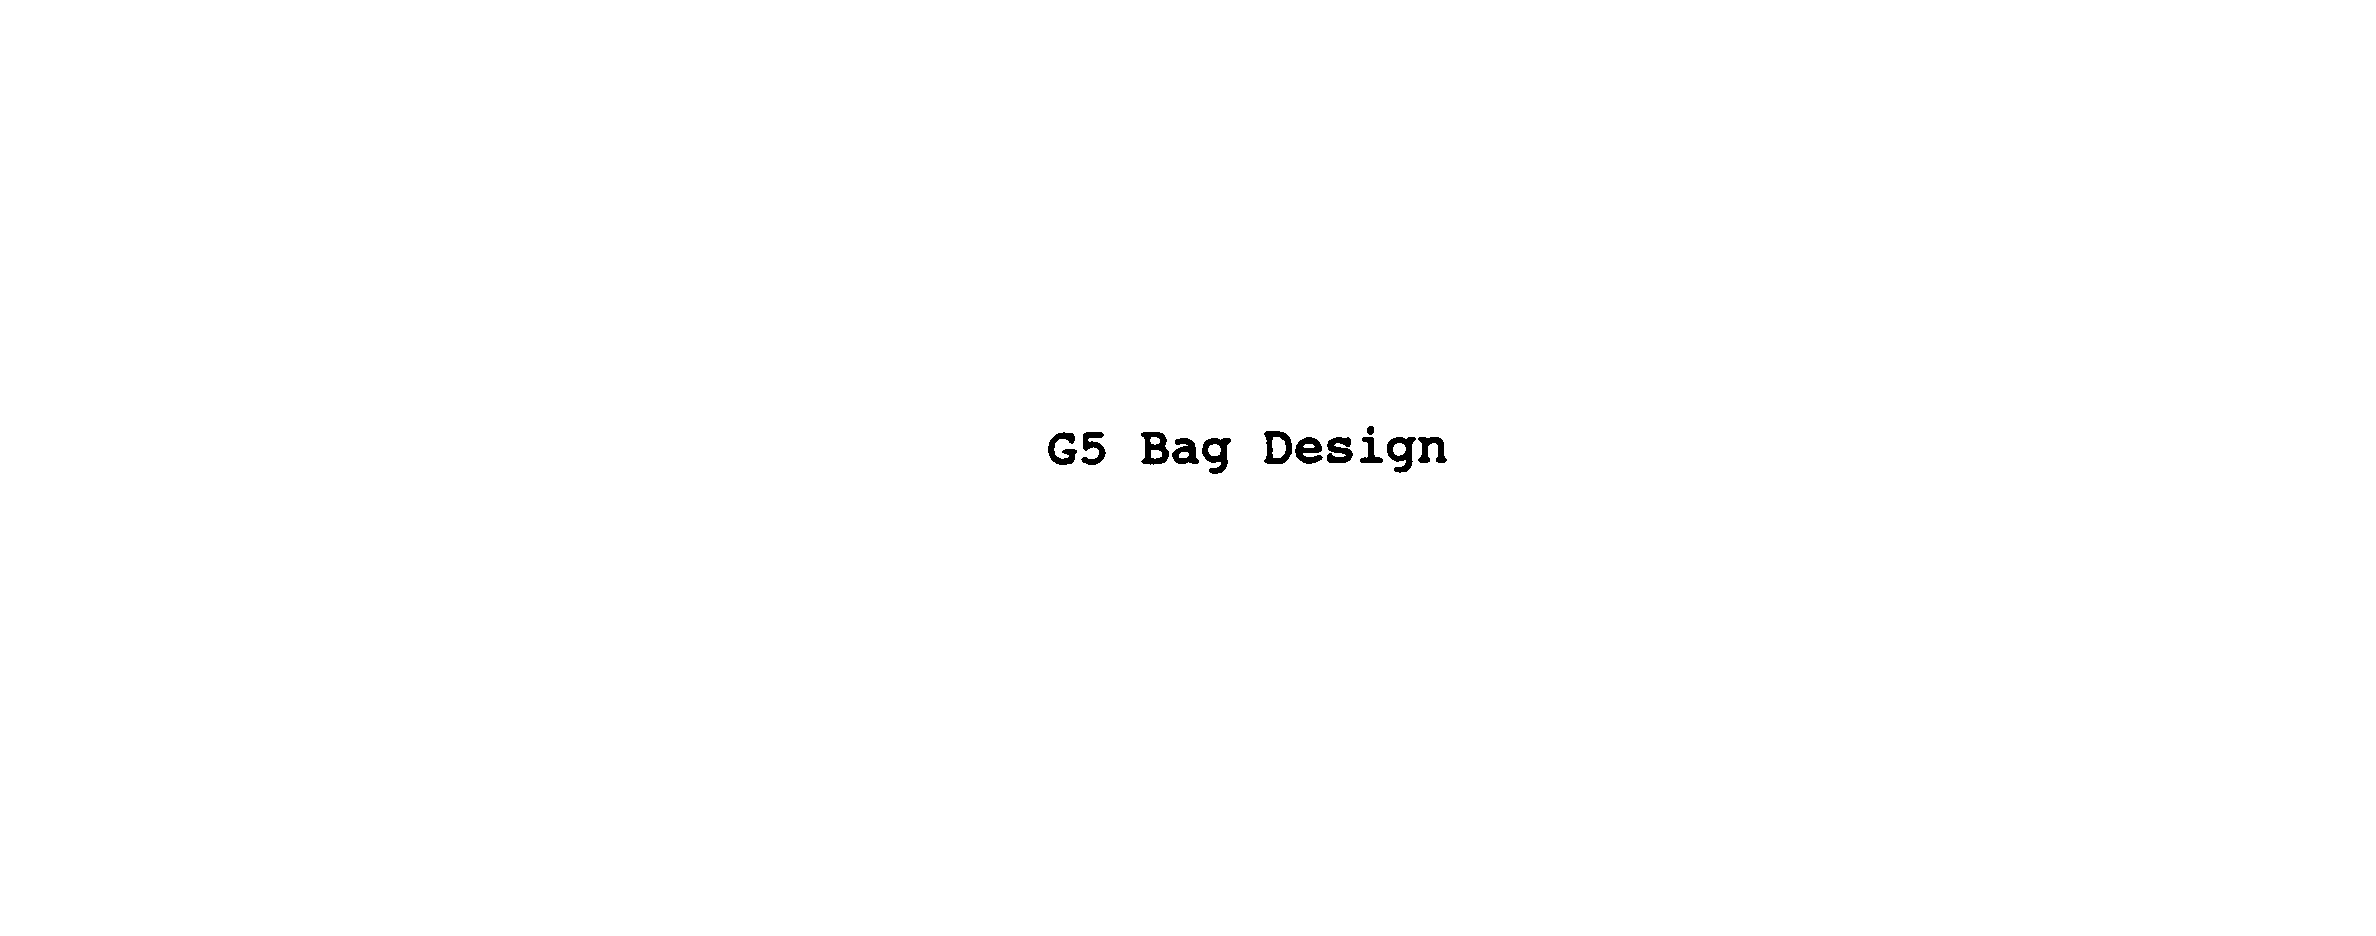  G5 BAG DESIGN